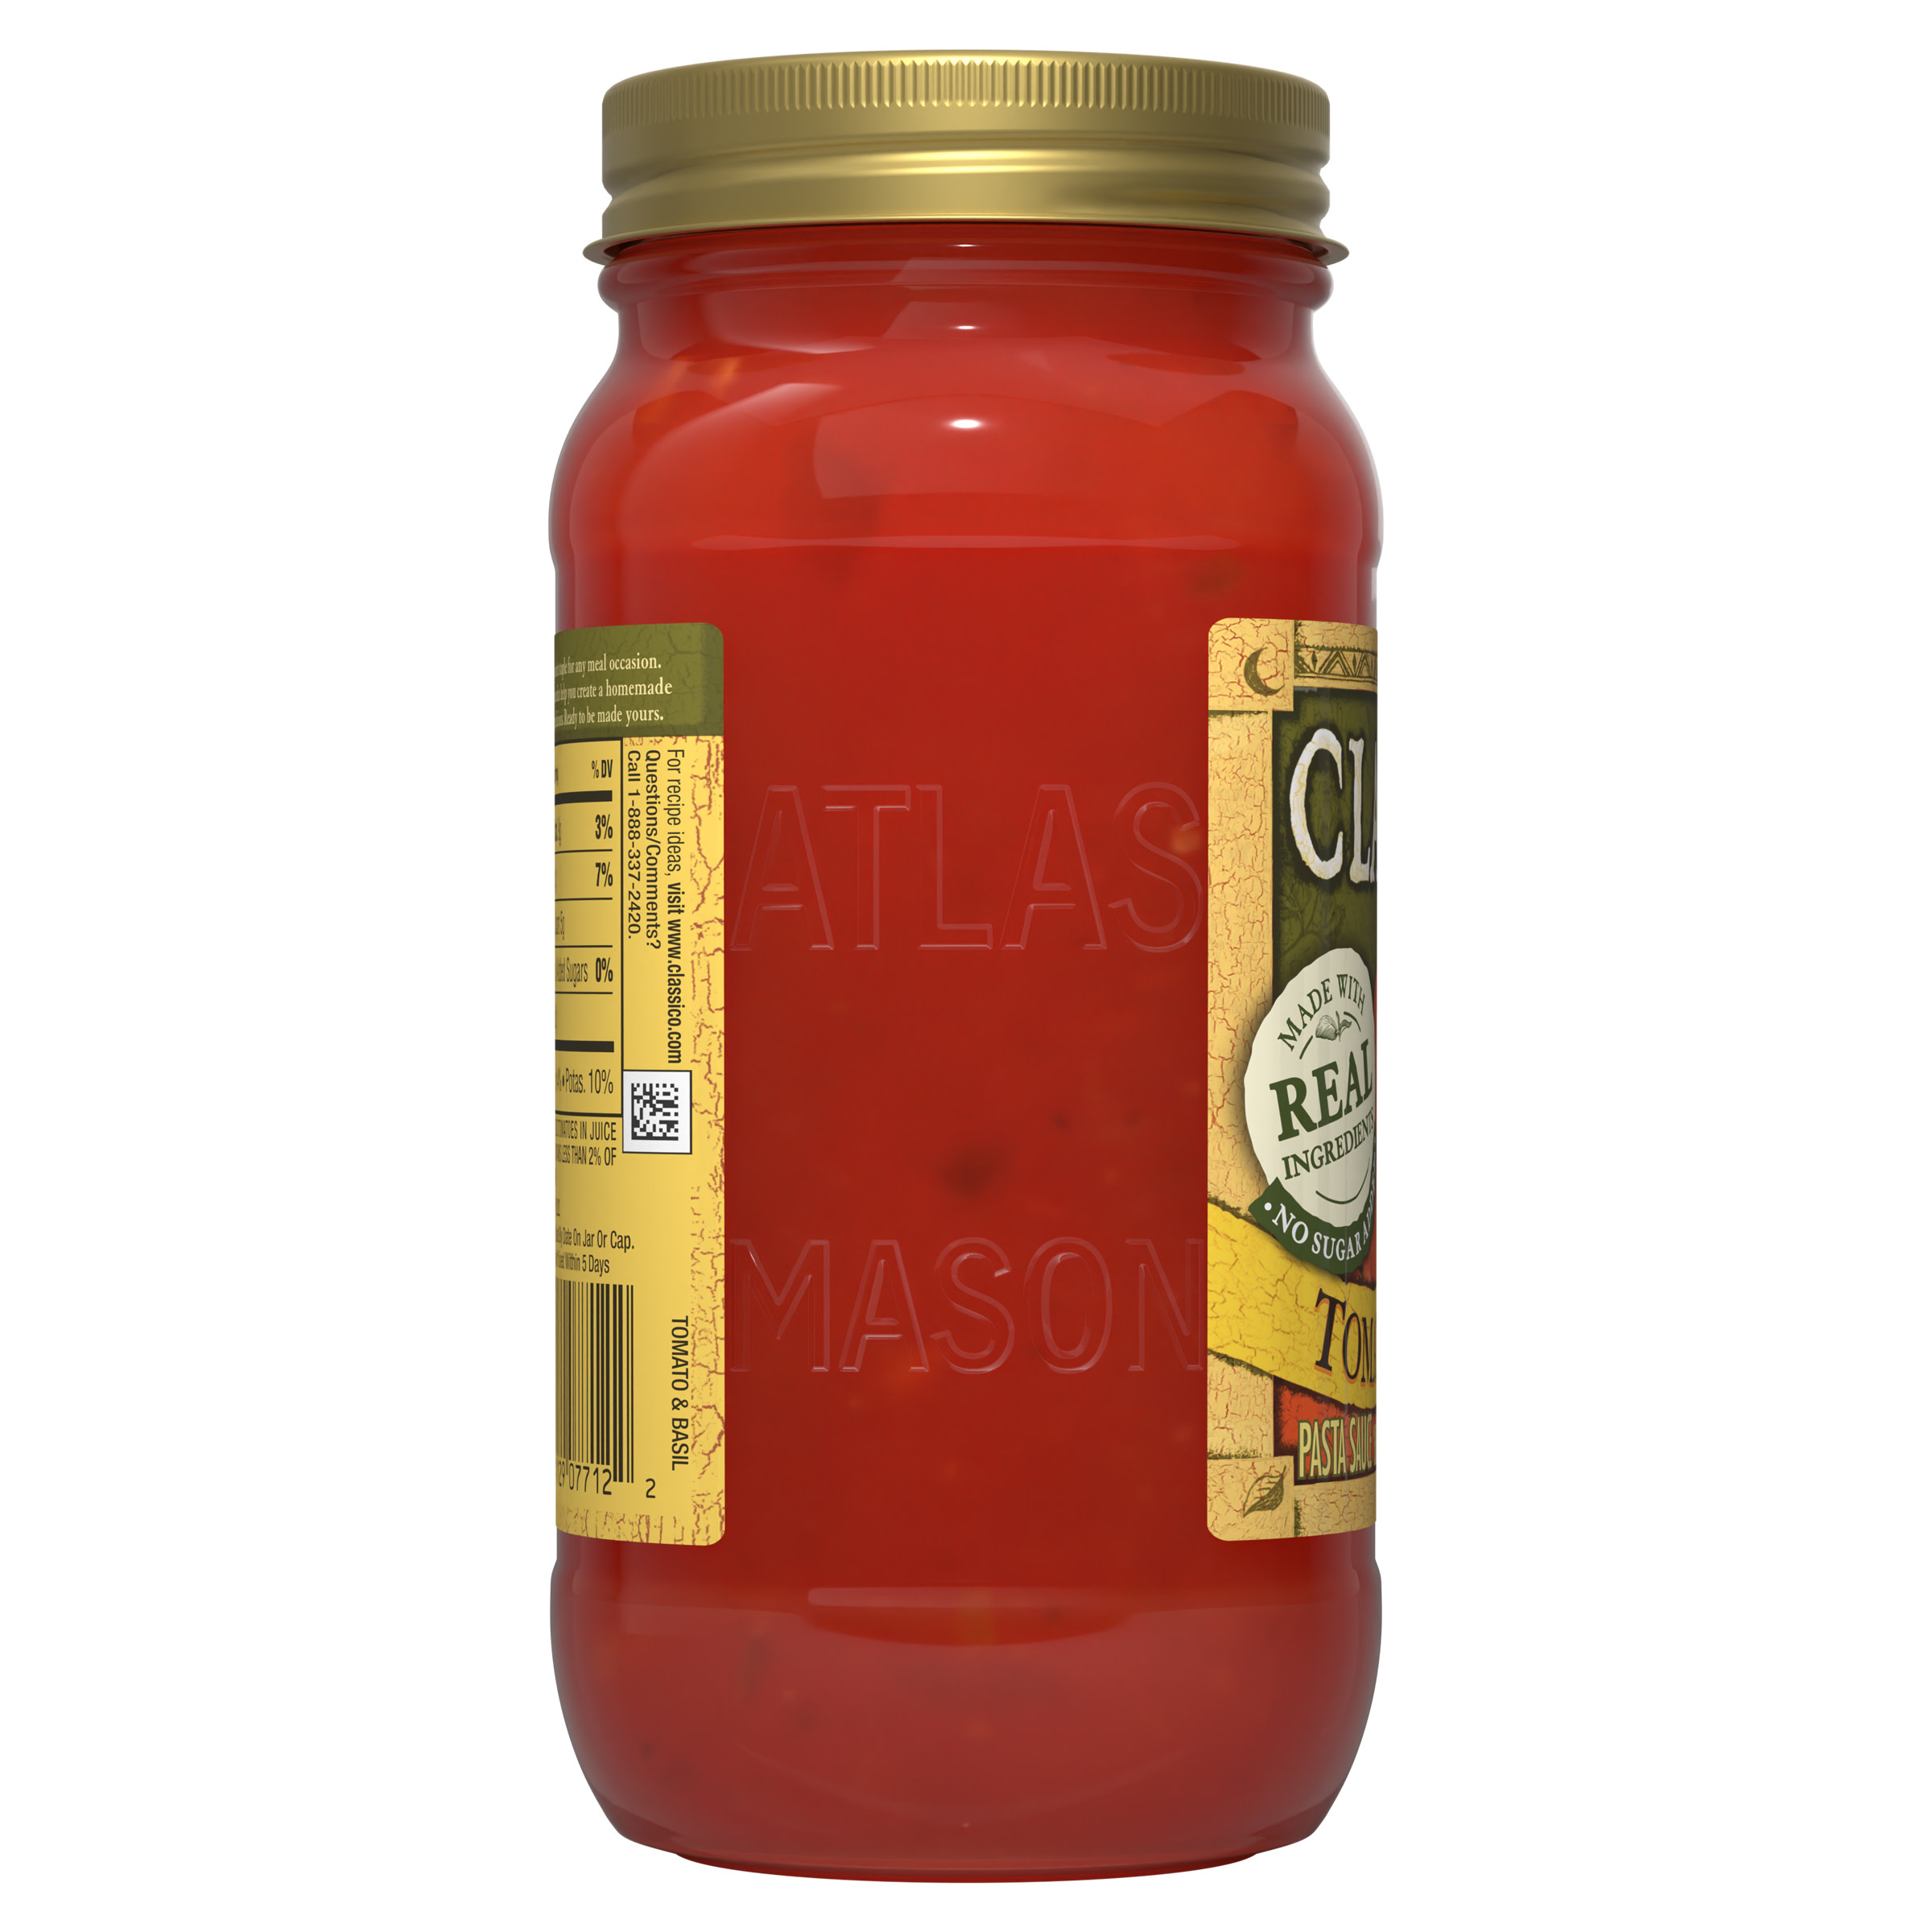 Classico Tomato & Basil Spaghetti Pasta Sauce, 24 oz. Jar - image 13 of 18